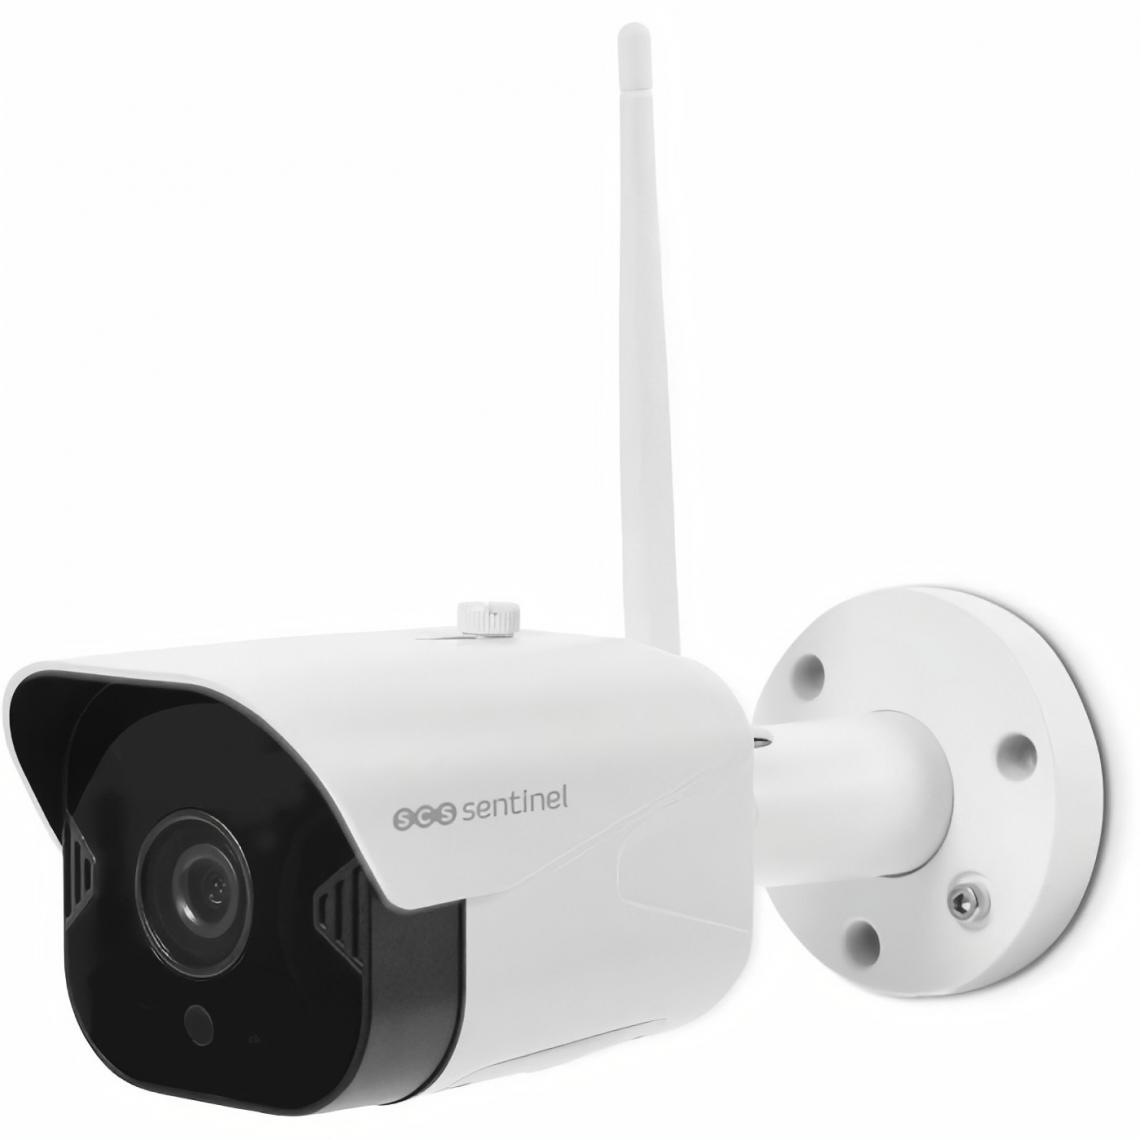 Scs Sentinel - SCS SENTINEL Caméra de surveillance extérieure Full HD - Caméra de surveillance connectée